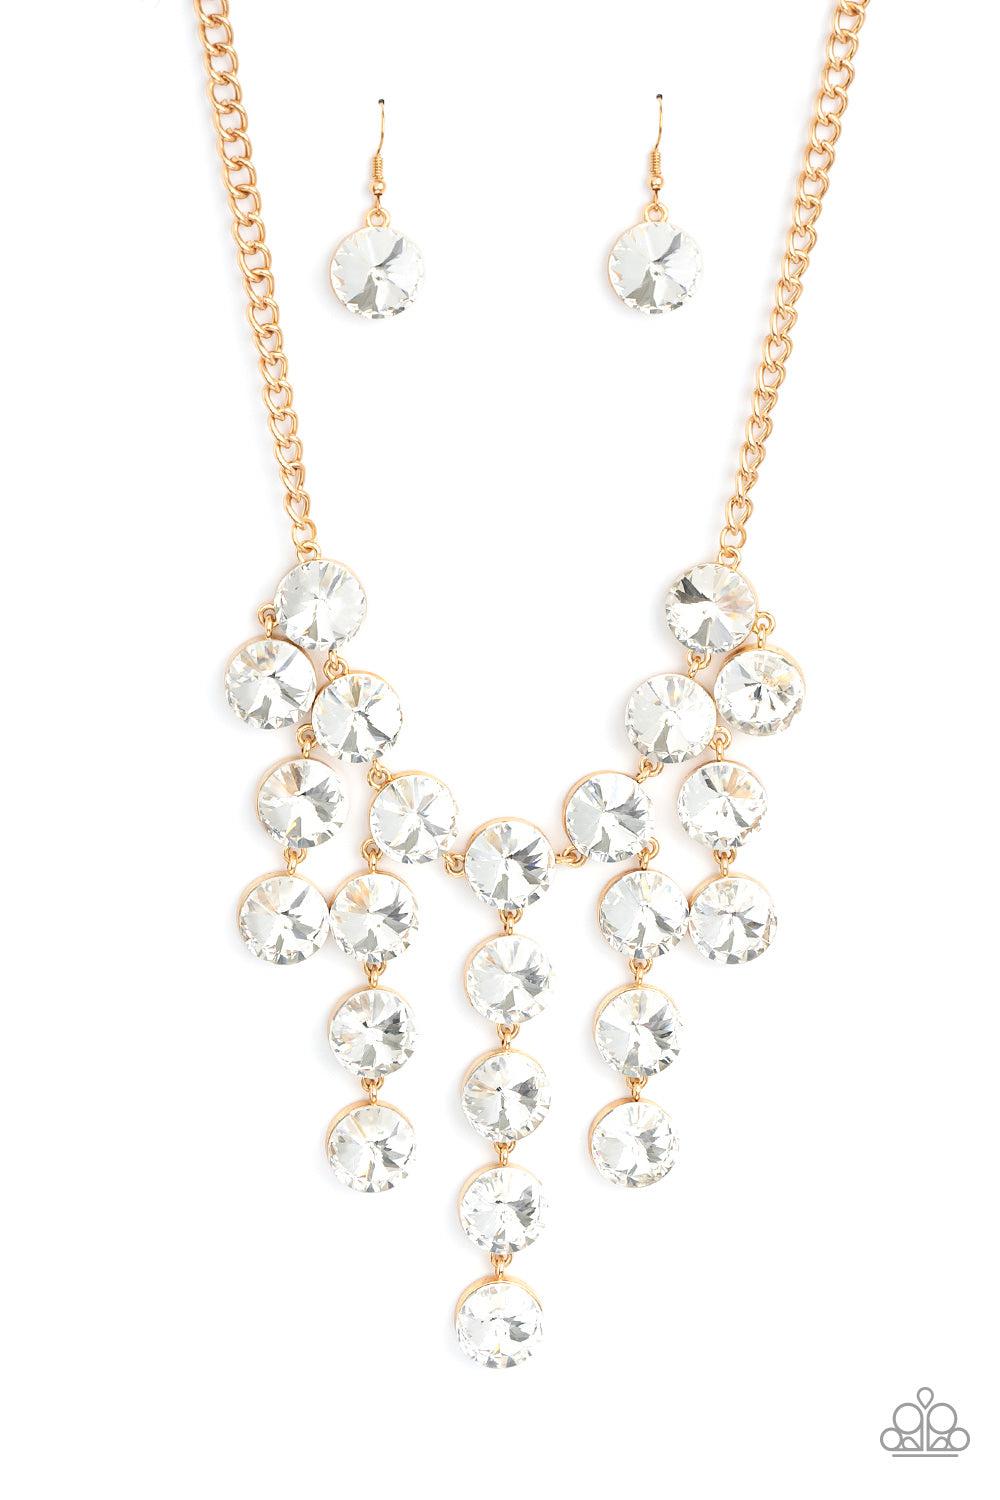 Spotlight Stunner Gold & White Rhinestone Necklace - Paparazzi Accessories- lightbox - CarasShop.com - $5 Jewelry by Cara Jewels